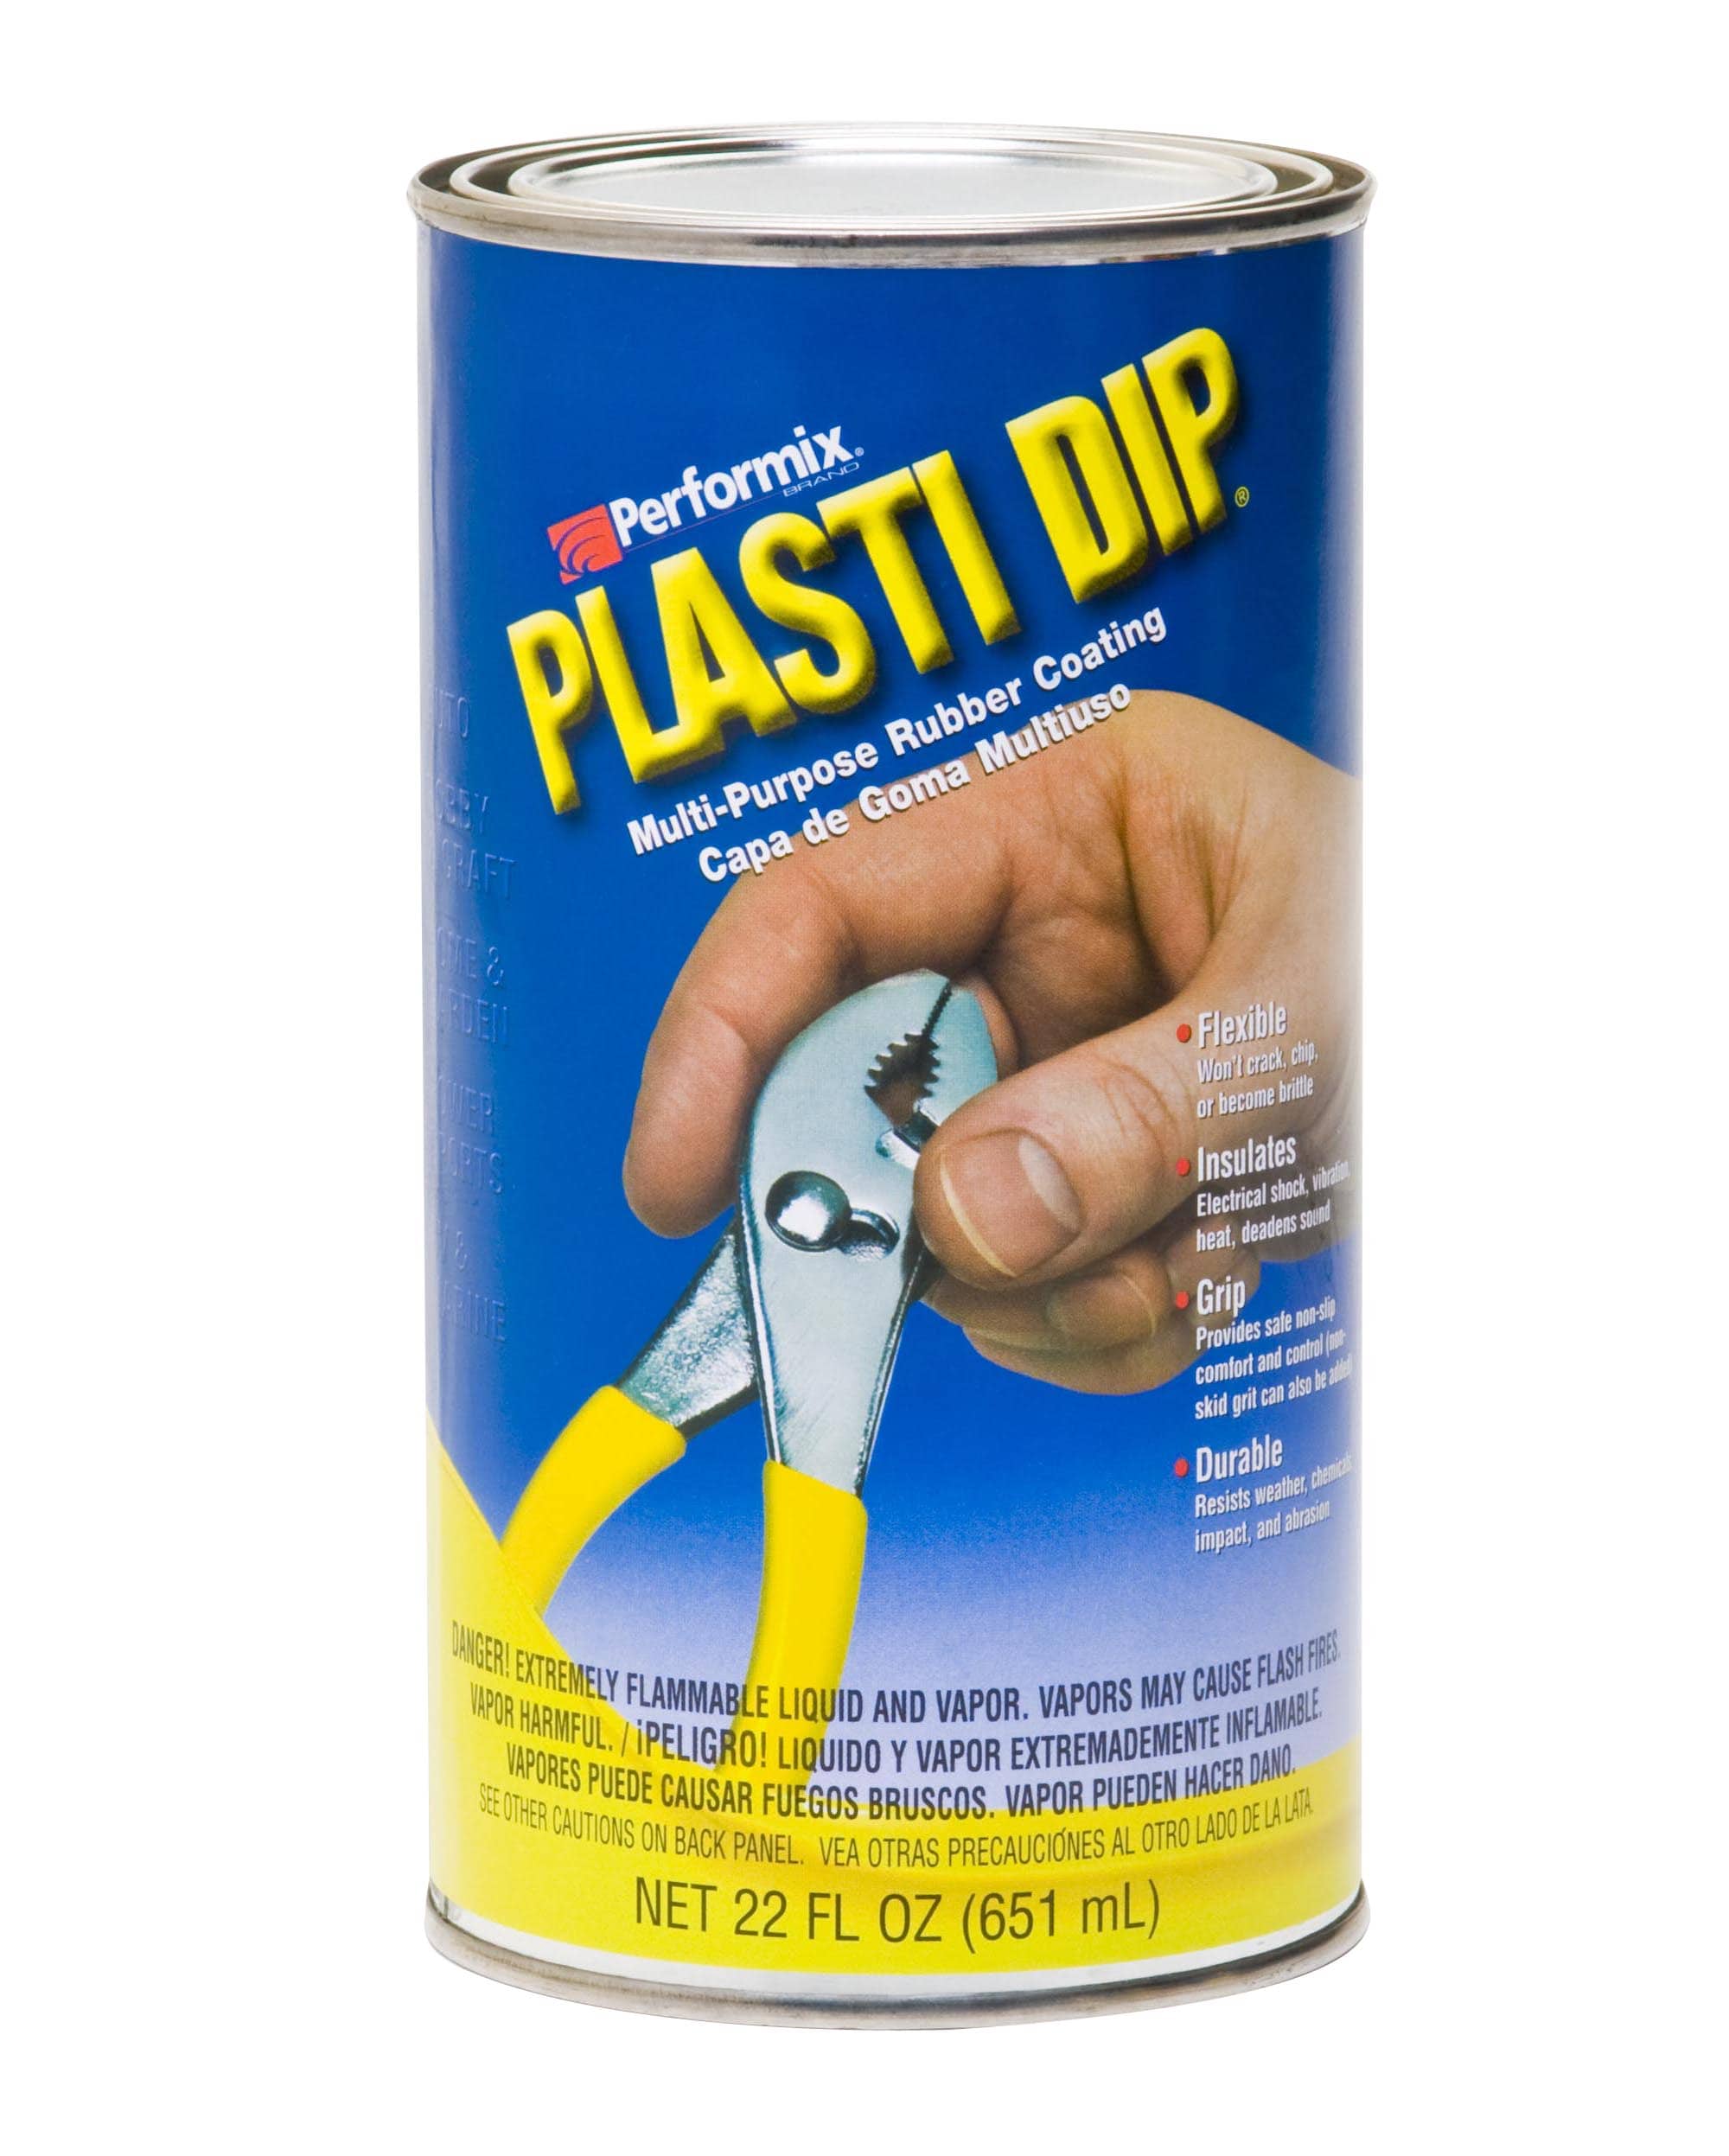 Plasti Dip - Specialty Rubber Coating Manufacturer